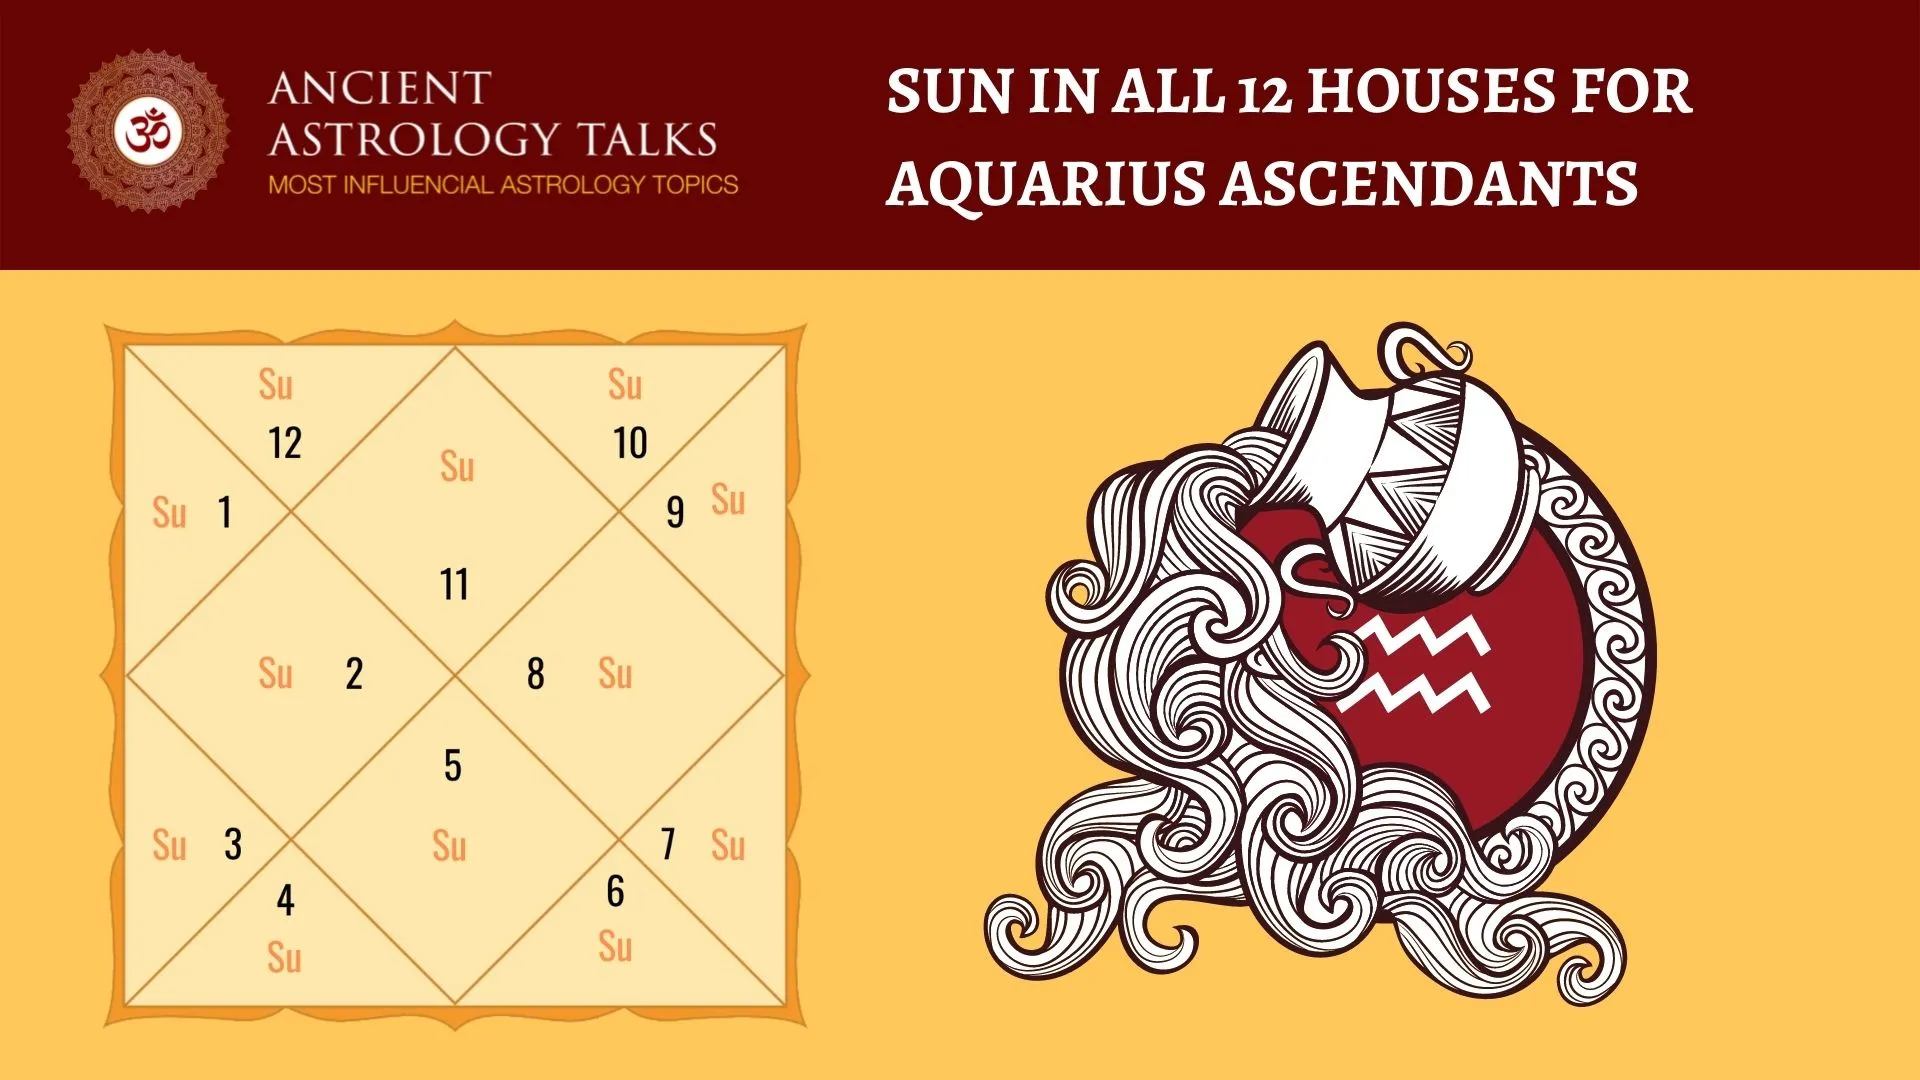 SUN IN ALL 12 HOUSES FOR AQUARIUS ASCENDANTS